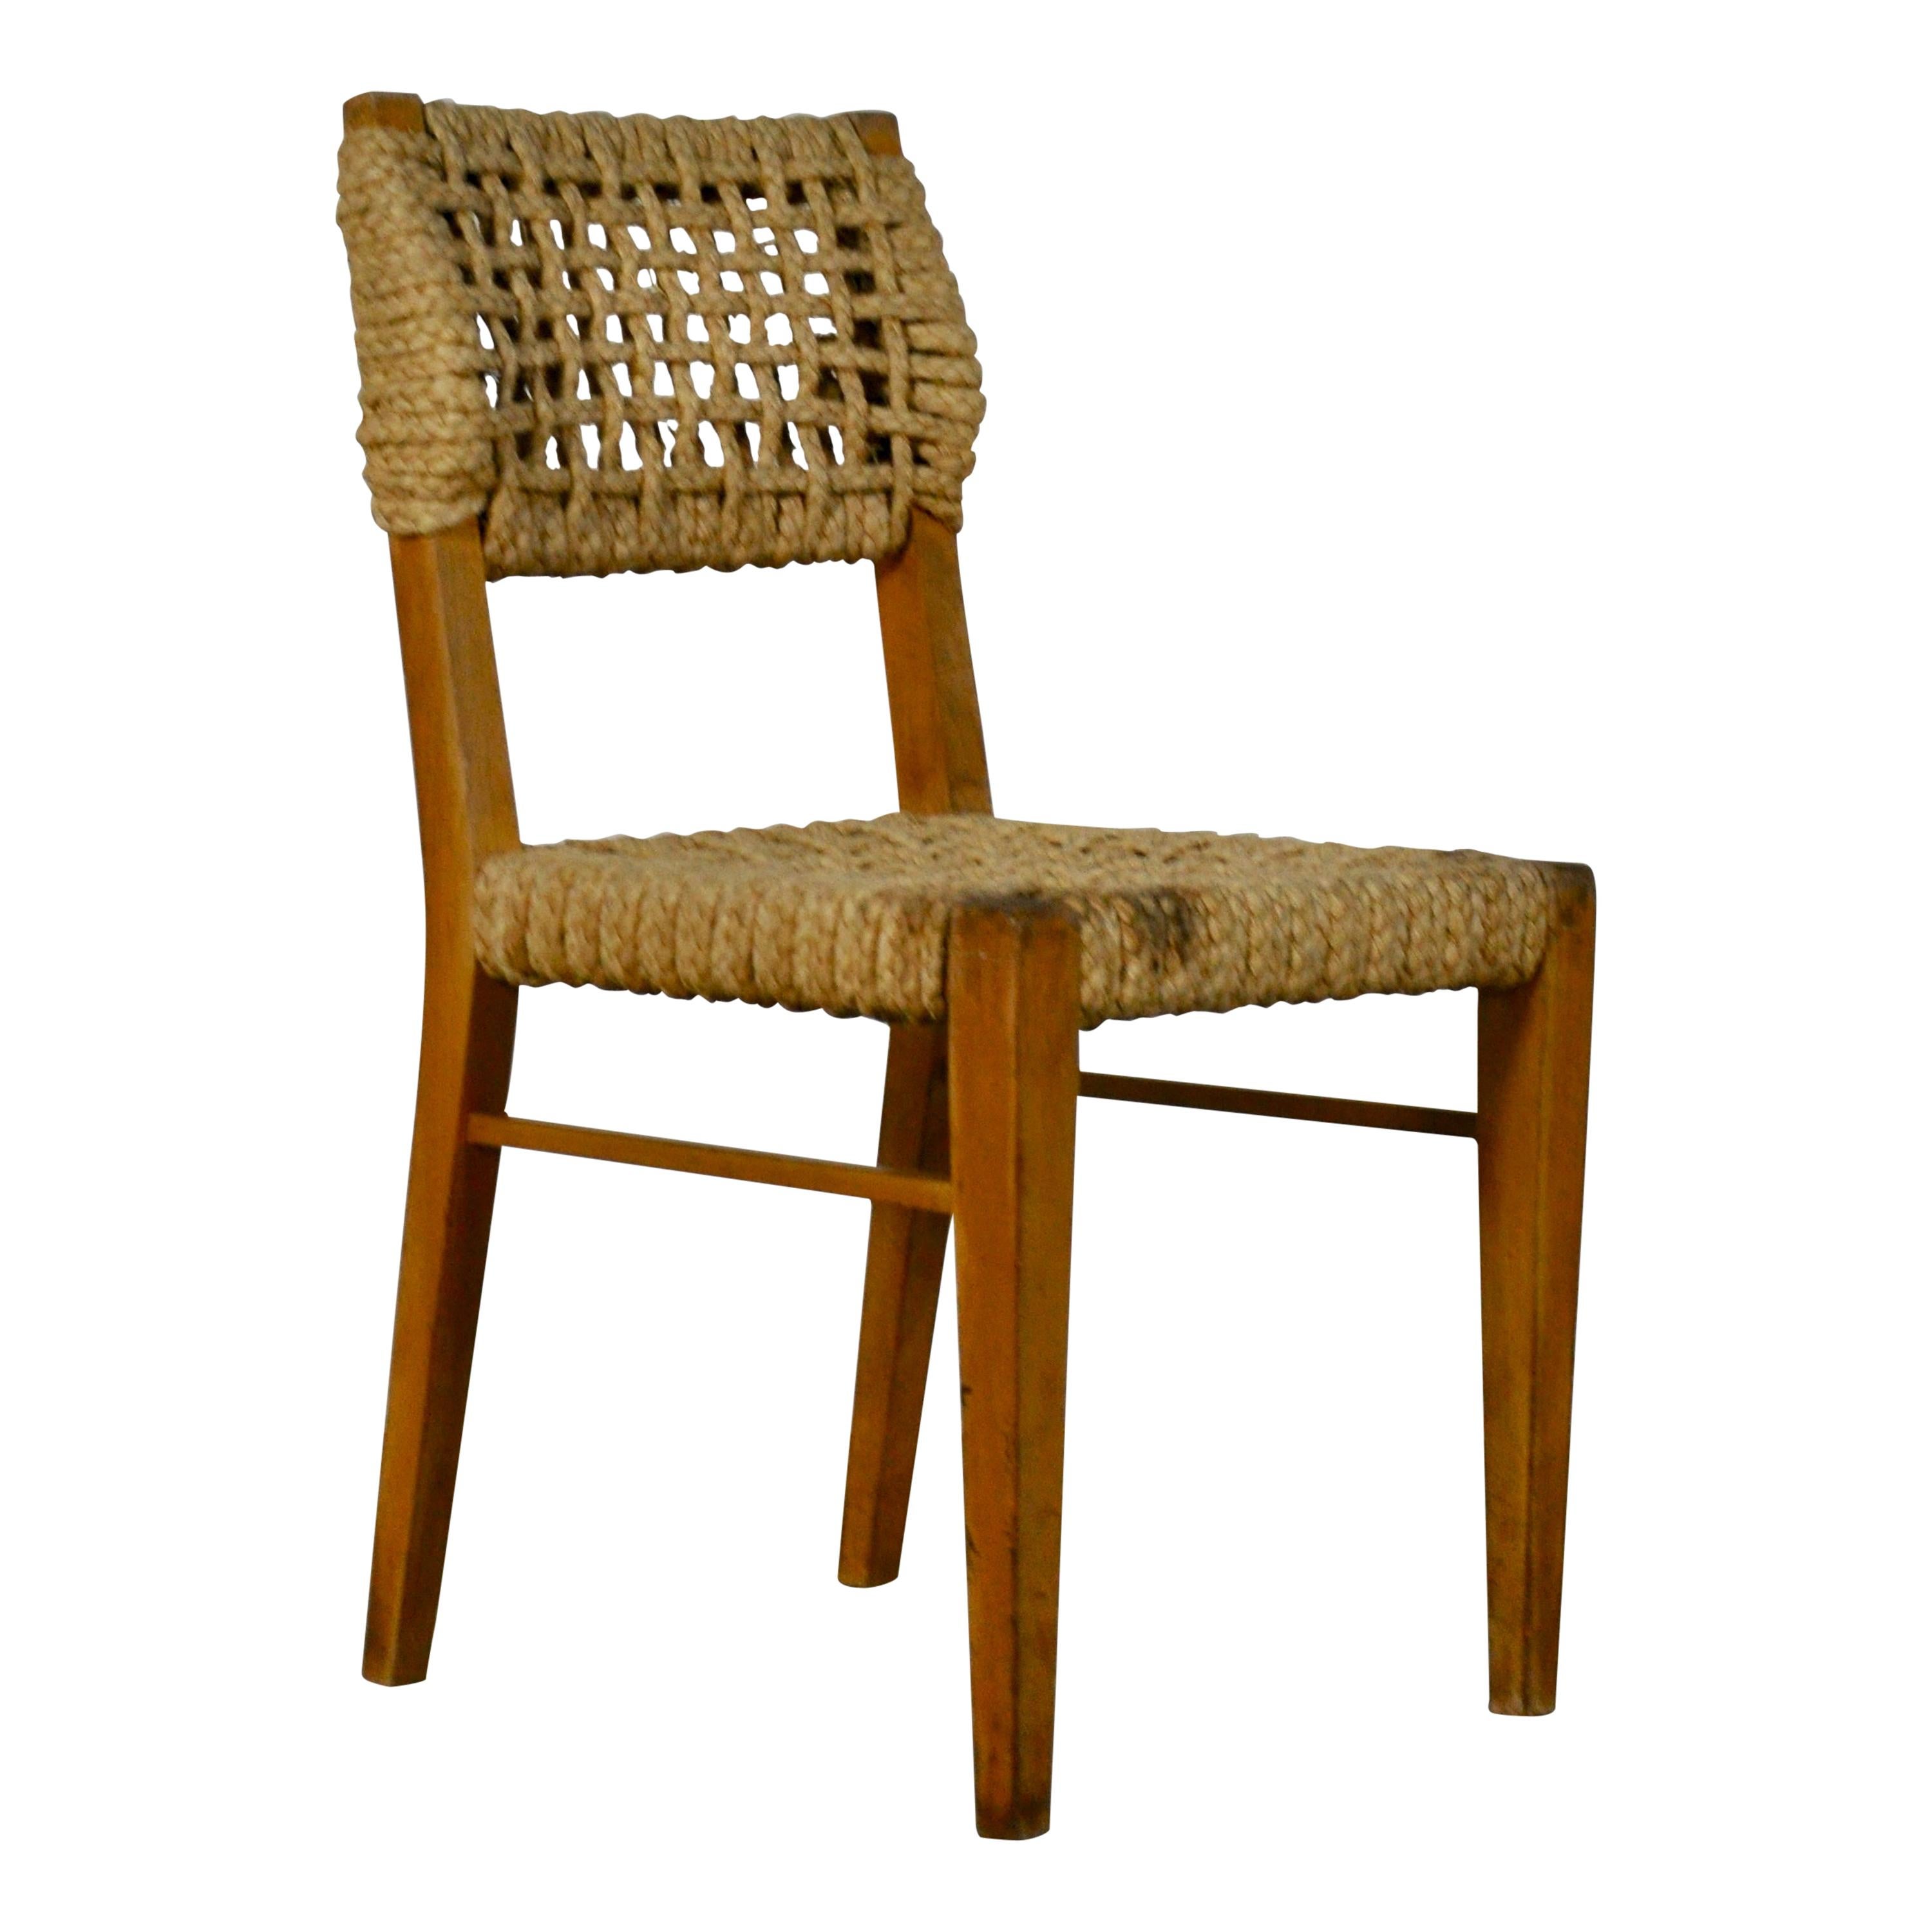 Chair by Adrien Audoux & Frida Minet for Vibo Vesoul, 1950s